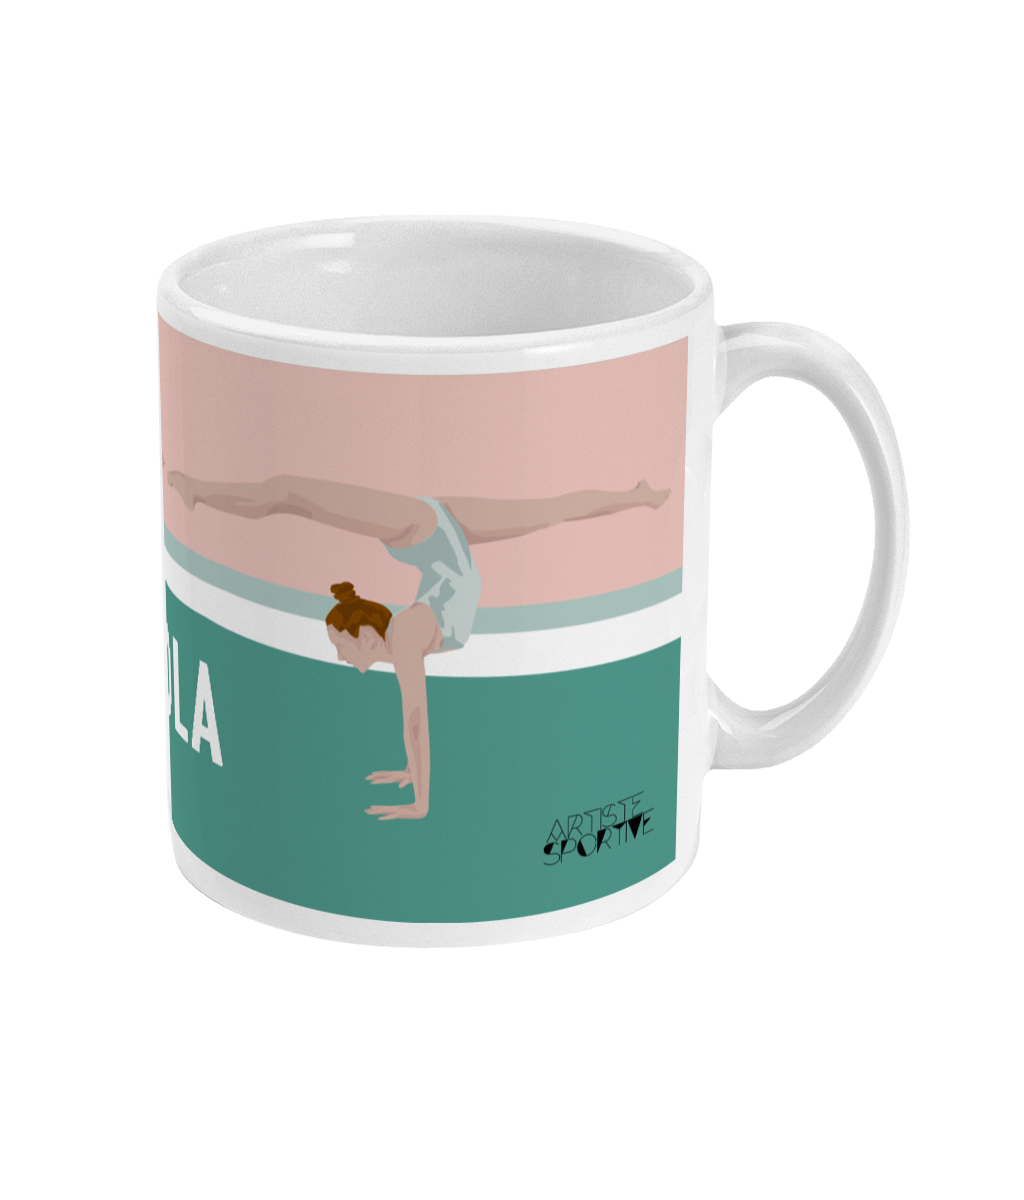 Tasse, tasse gymnastique, mug personnalisable, ajouter un prénom, original, gymnaste, cadeau noël, cadeau anniversaire, club de gymnastique